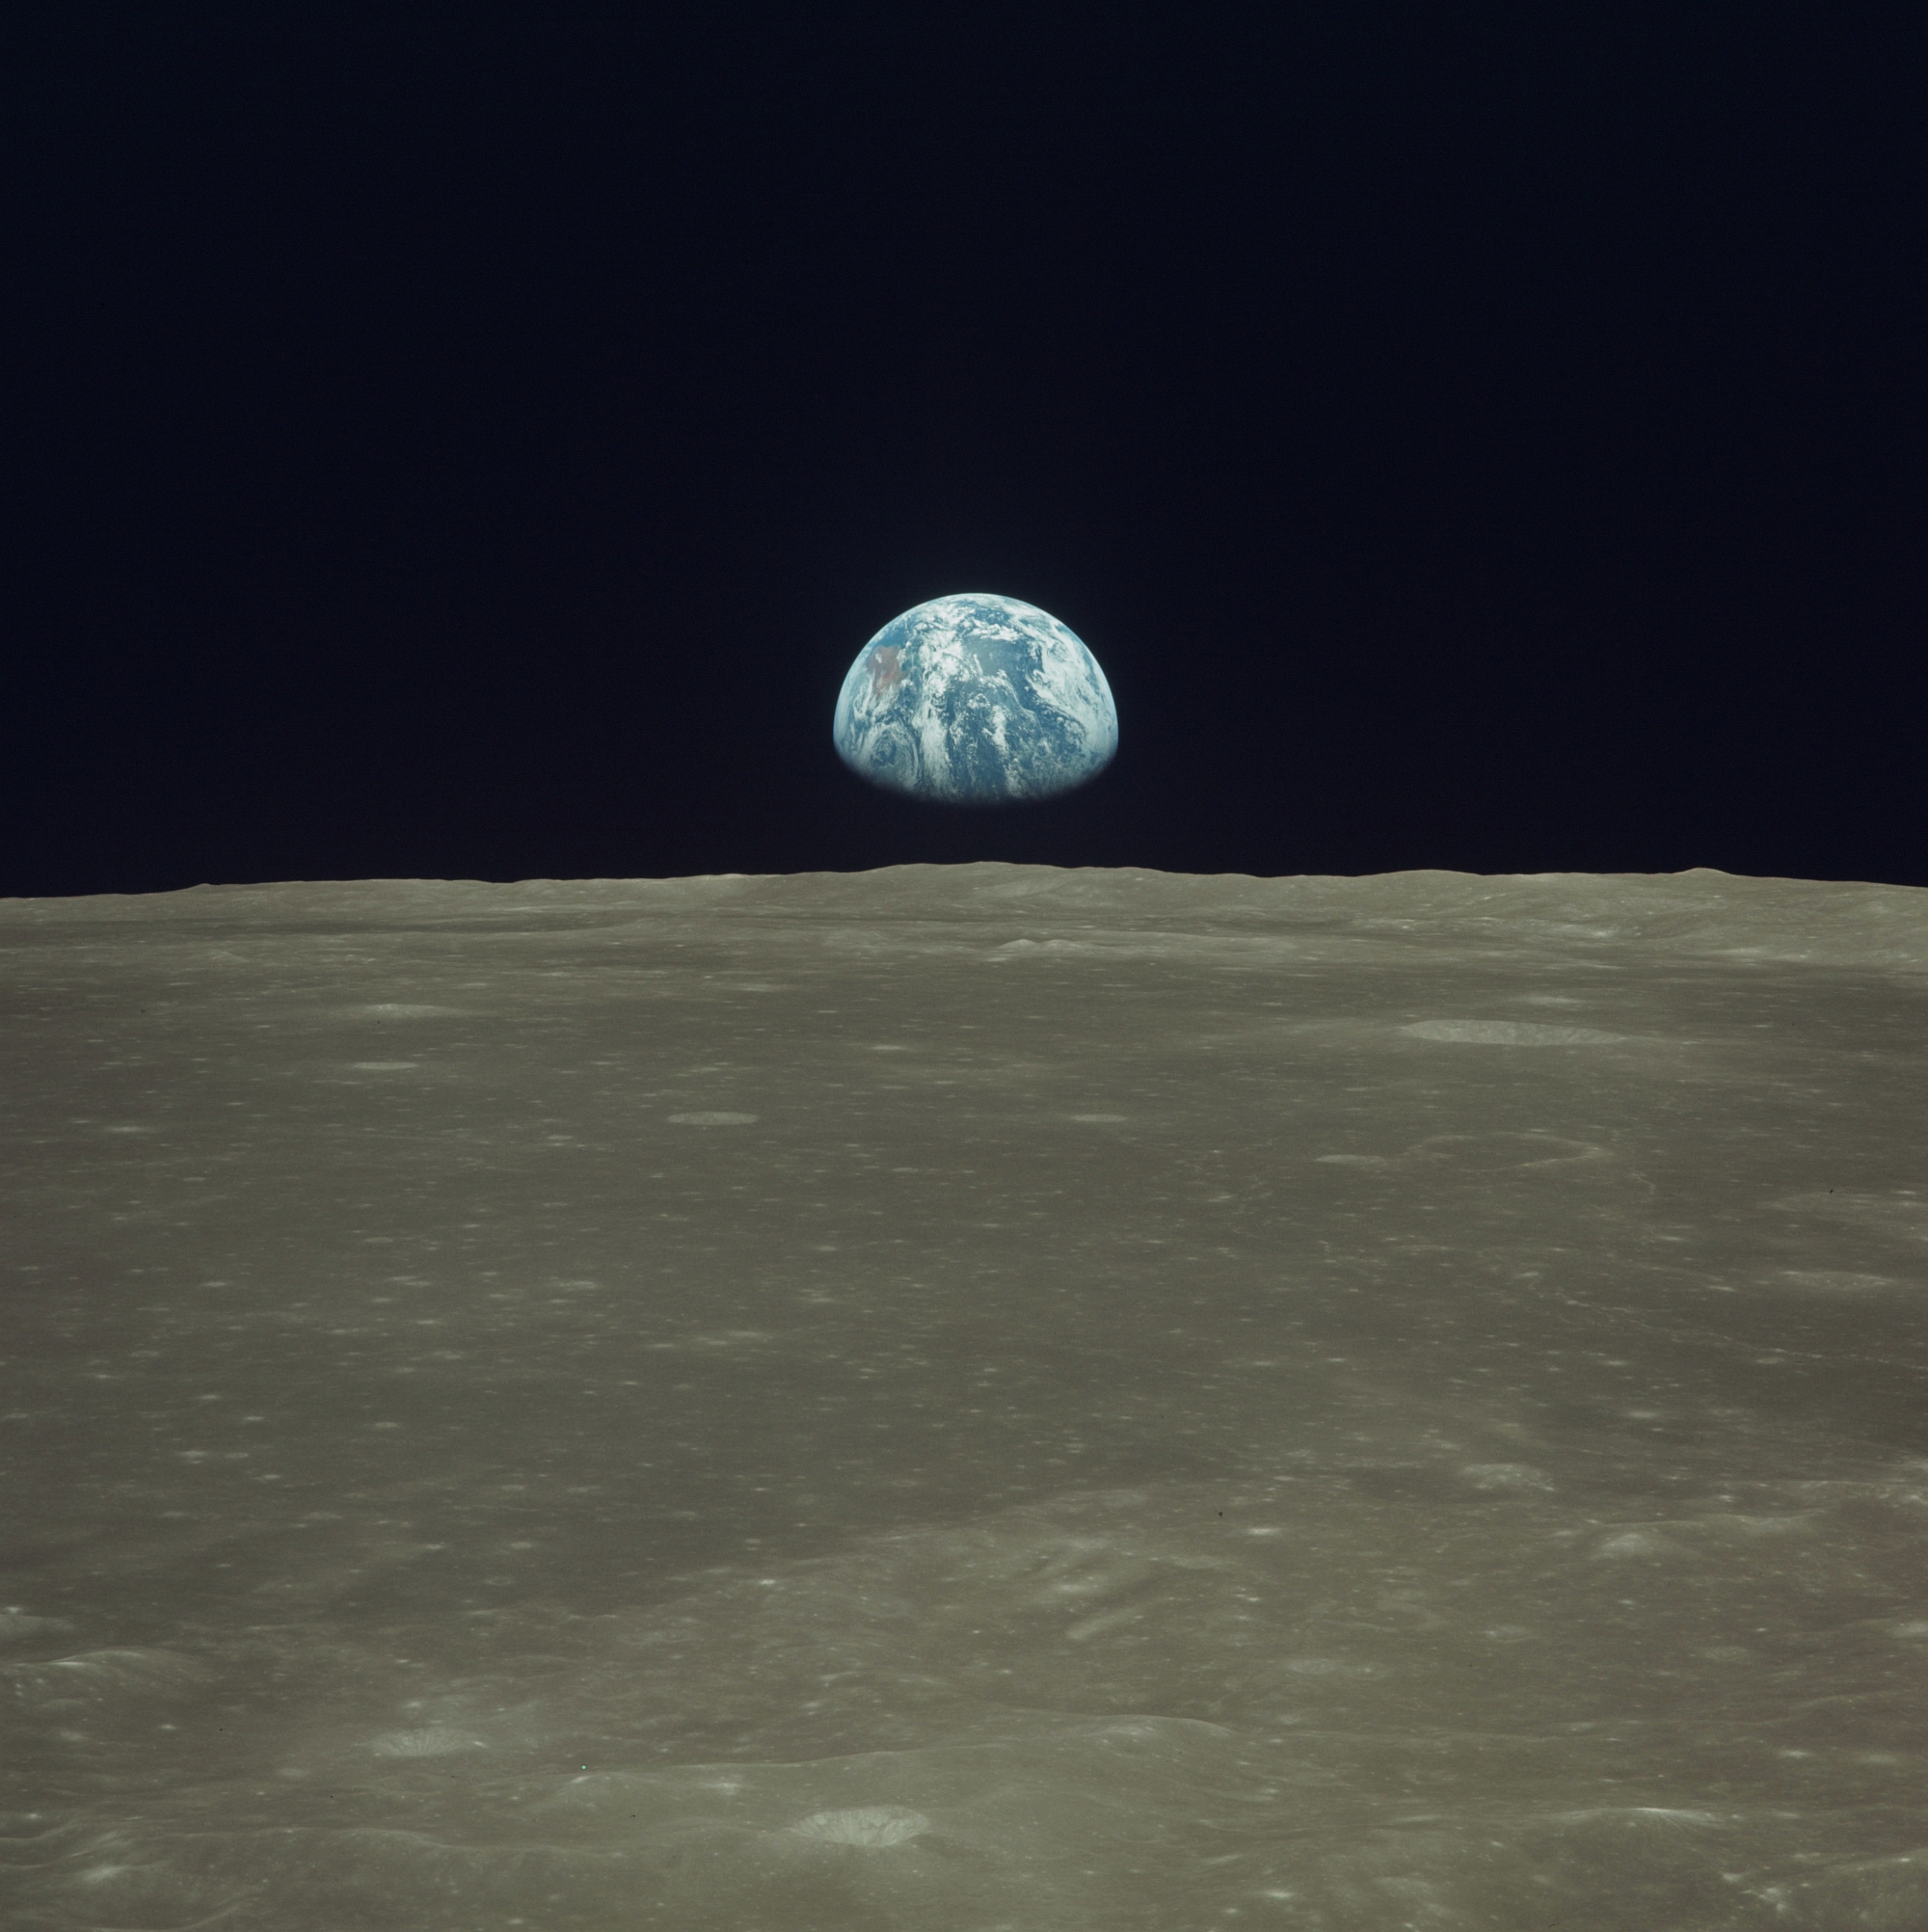 outer space, Moon, Earth, earthrise - desktop wallpaper